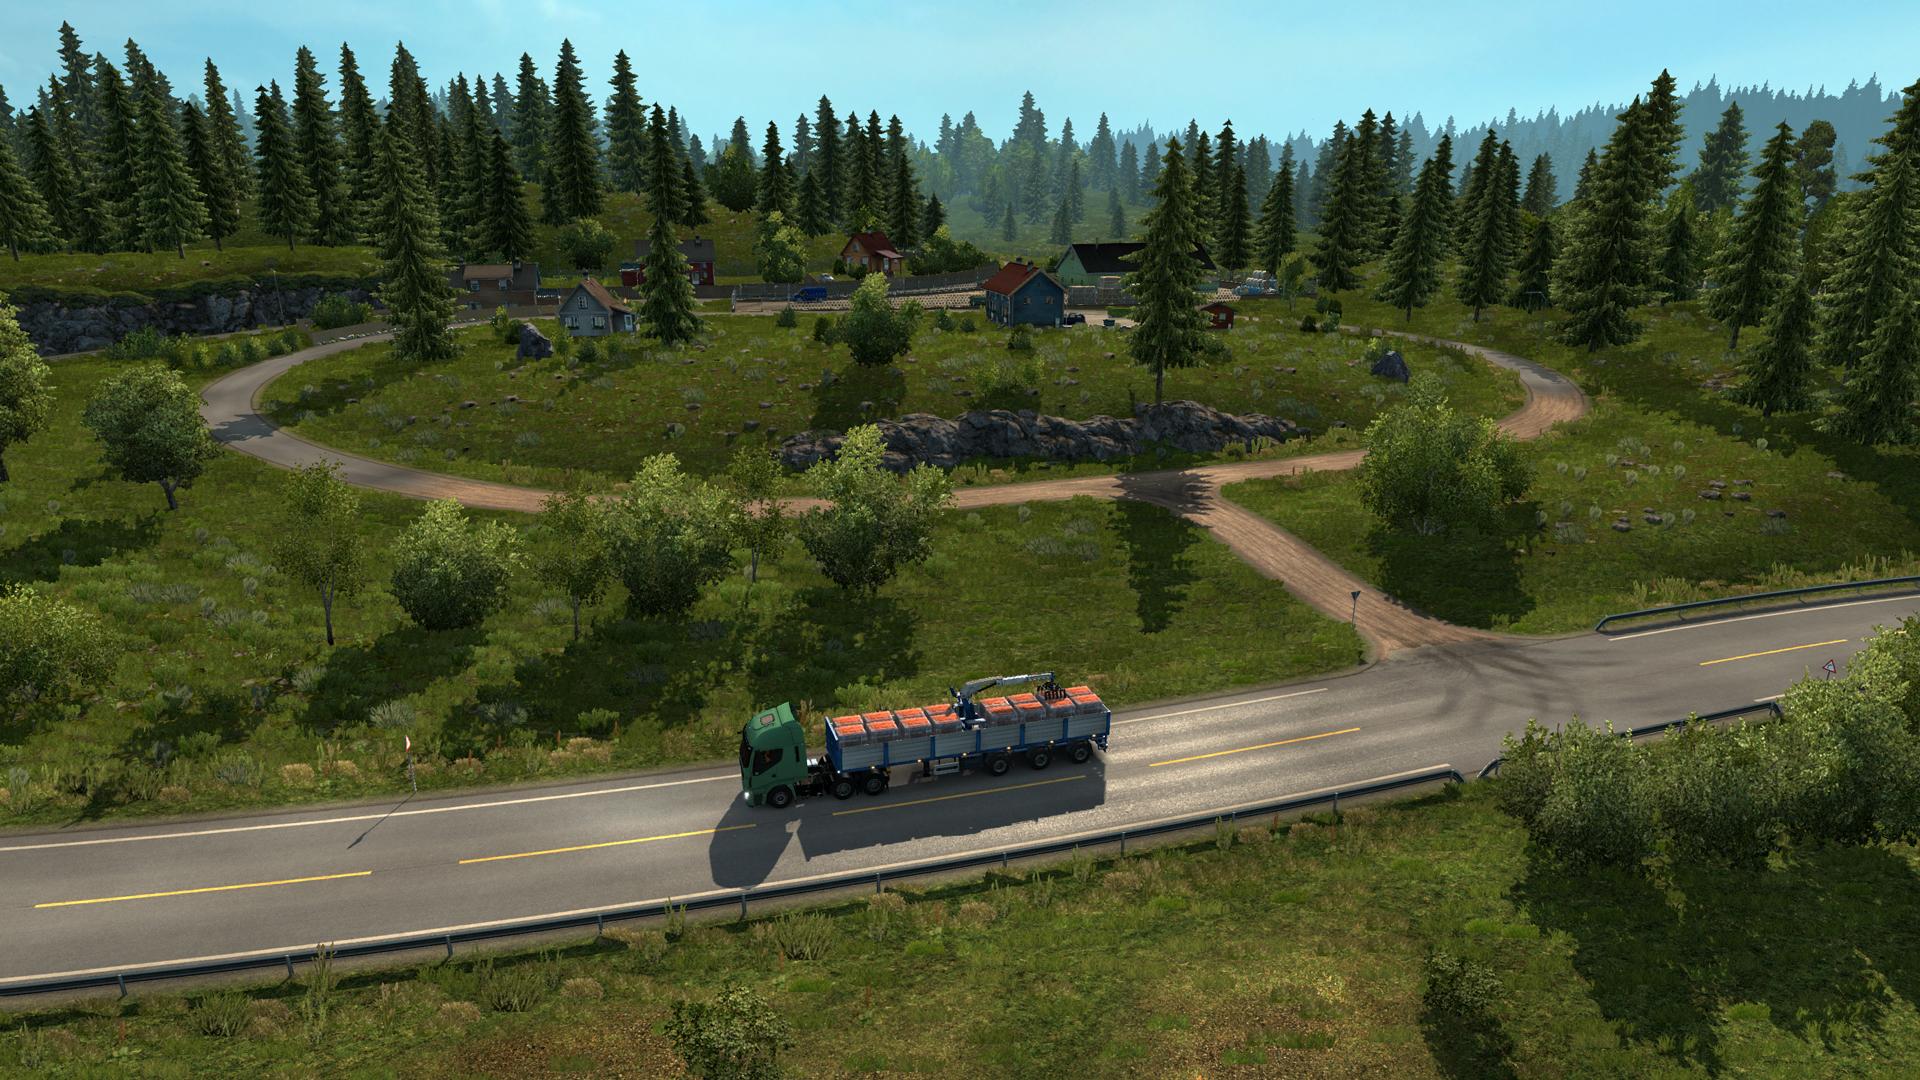 Euro Truck Simulator 2 - Scandinavia